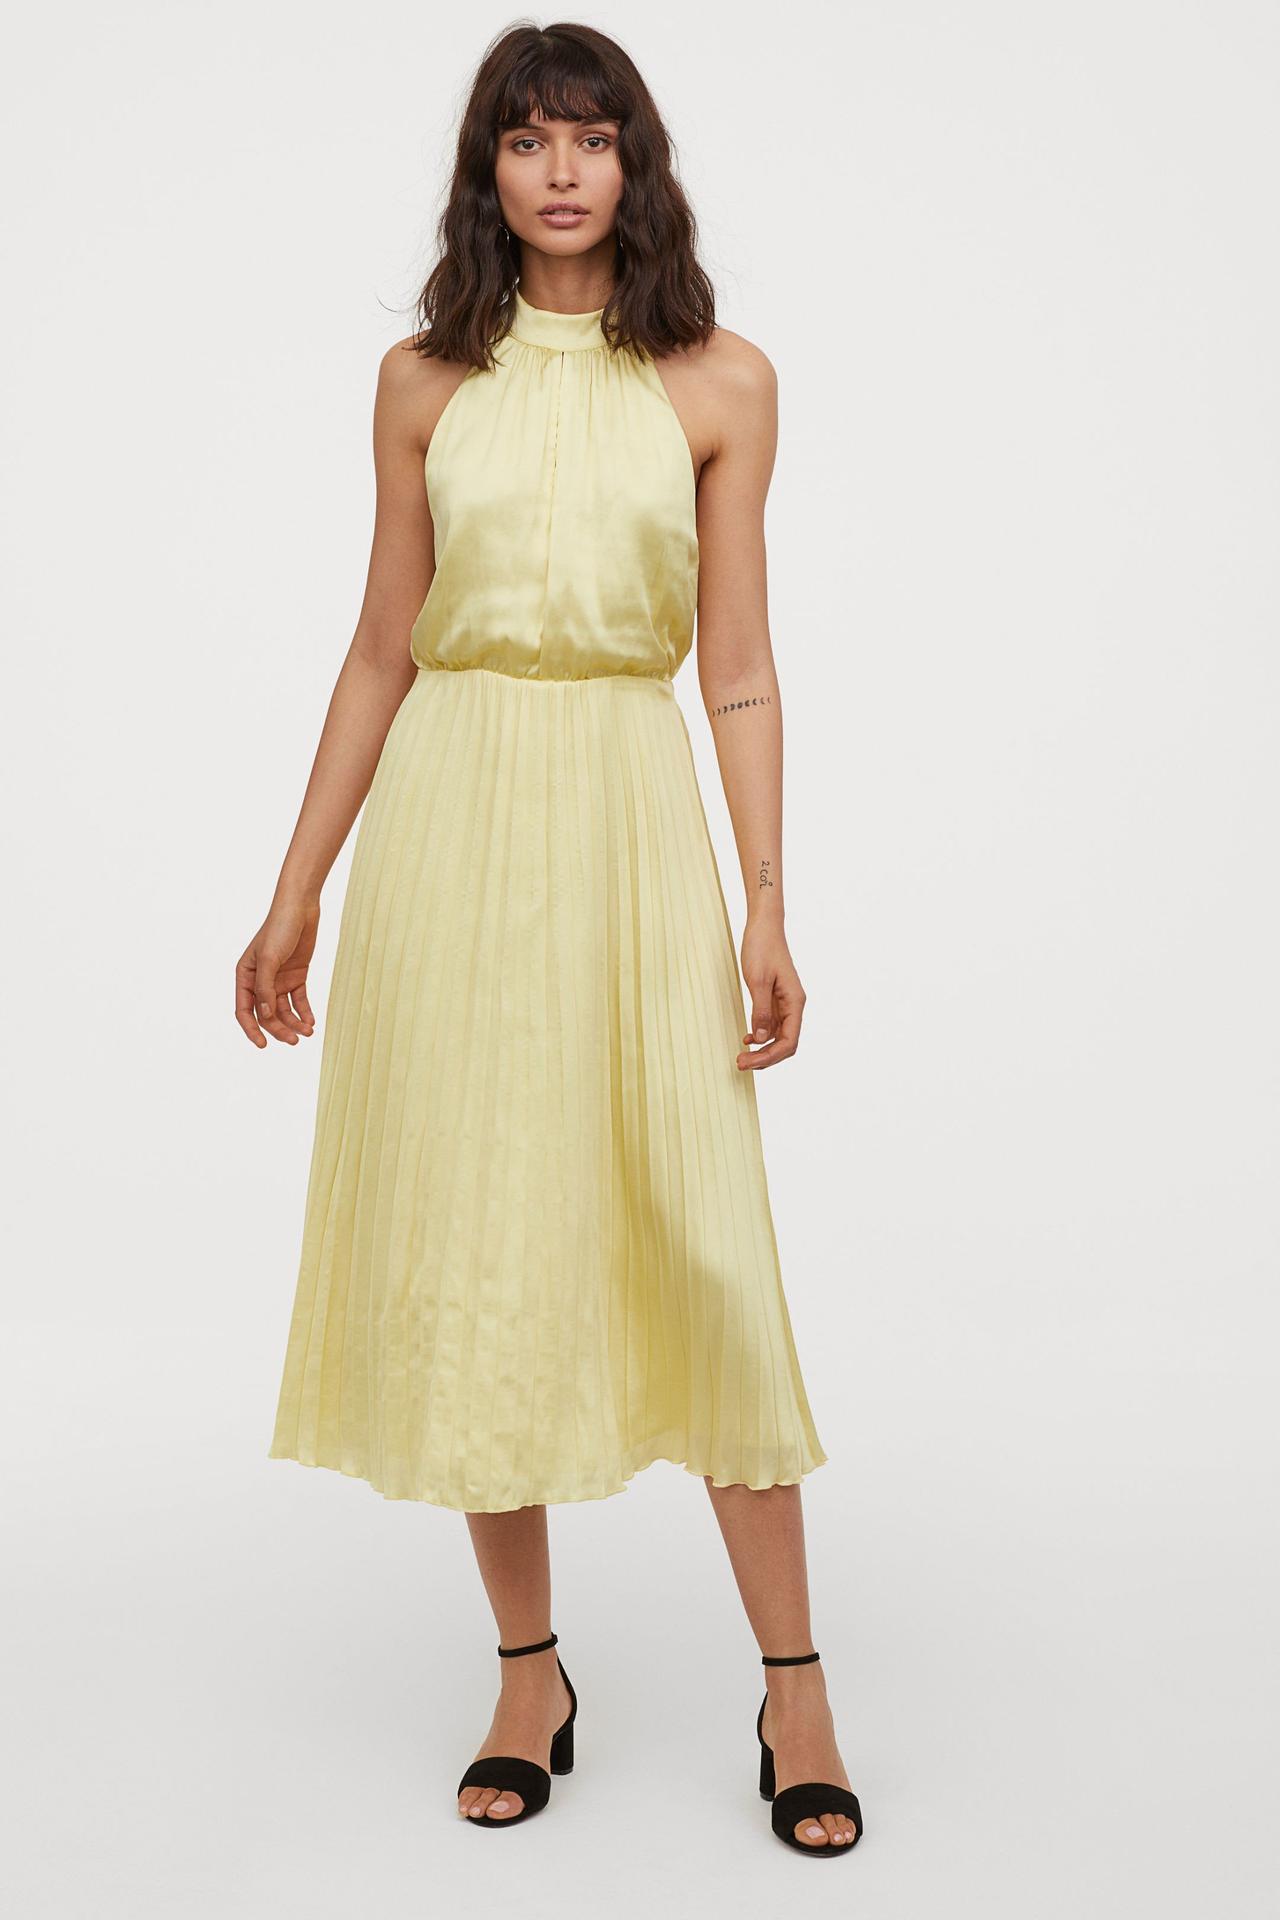 CHICWISH Women's Lemon Tree Jacquard Pleated Skirt, Lemon